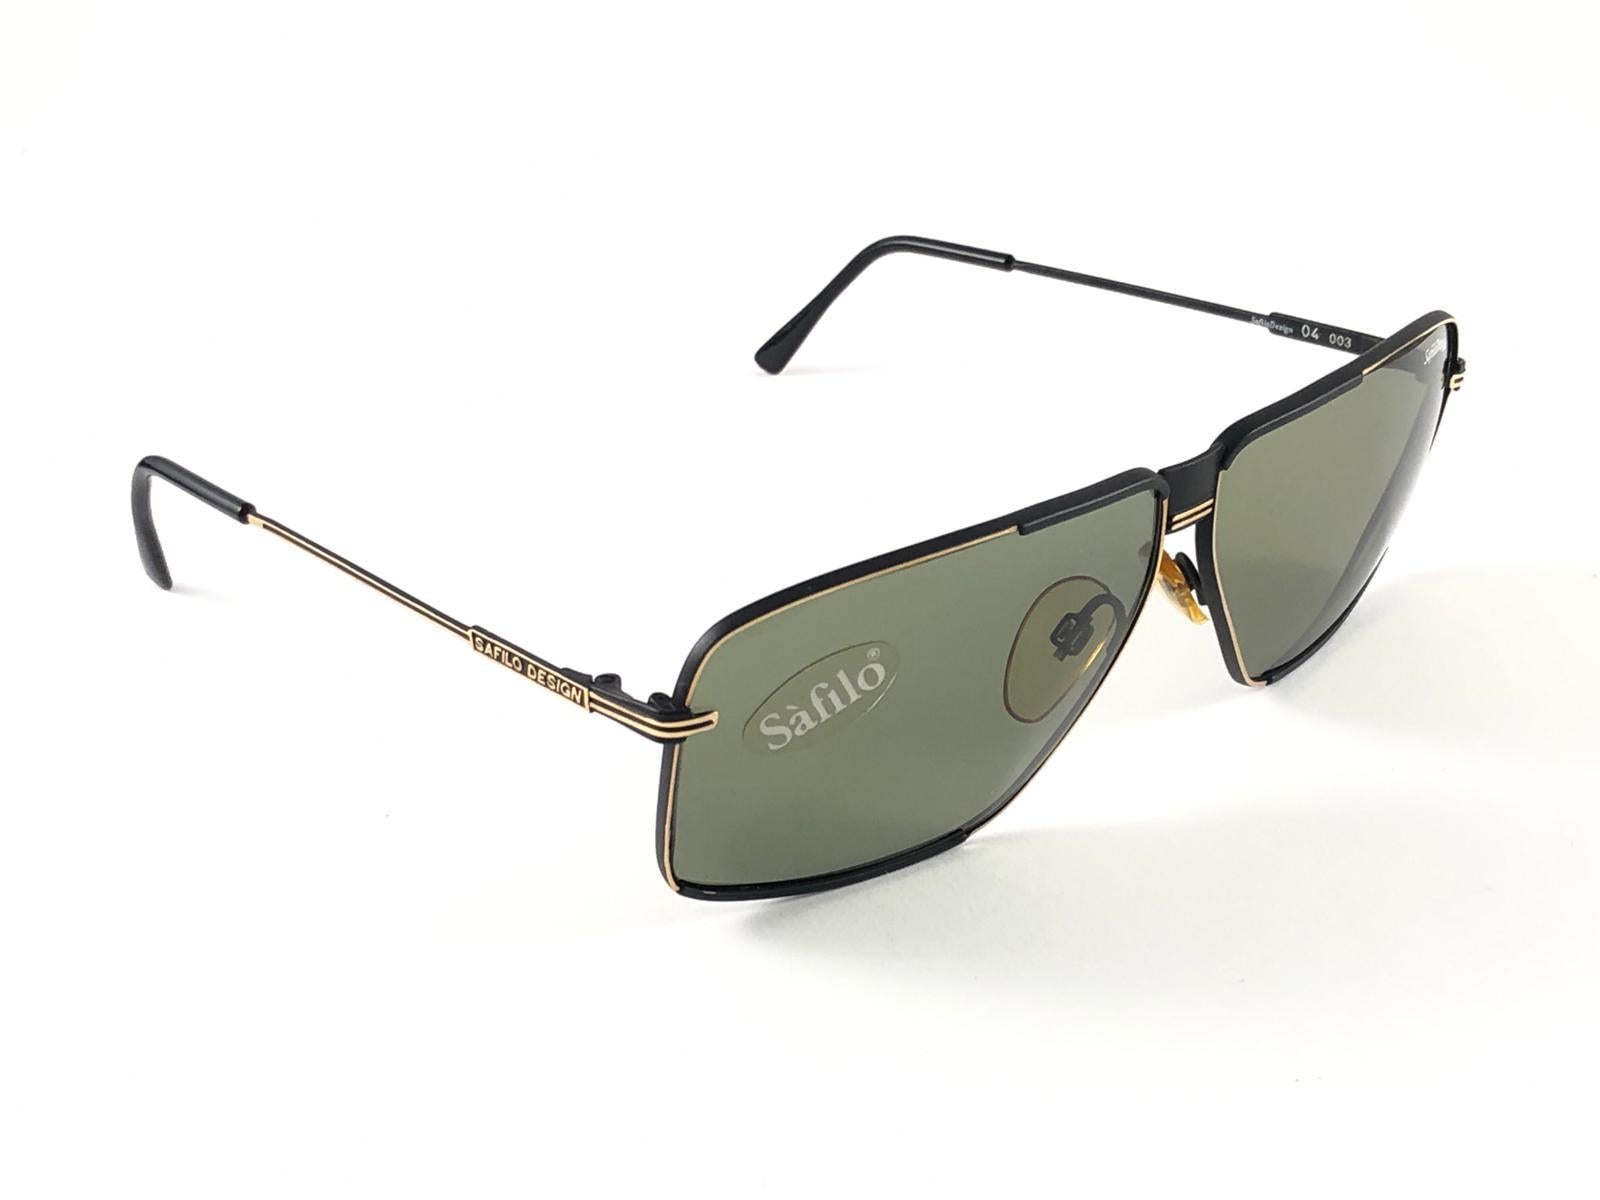 New Vintage Safilo Design 04 Black Mate Aviator 1980's Sunglasses Made in Italy For Sale 2